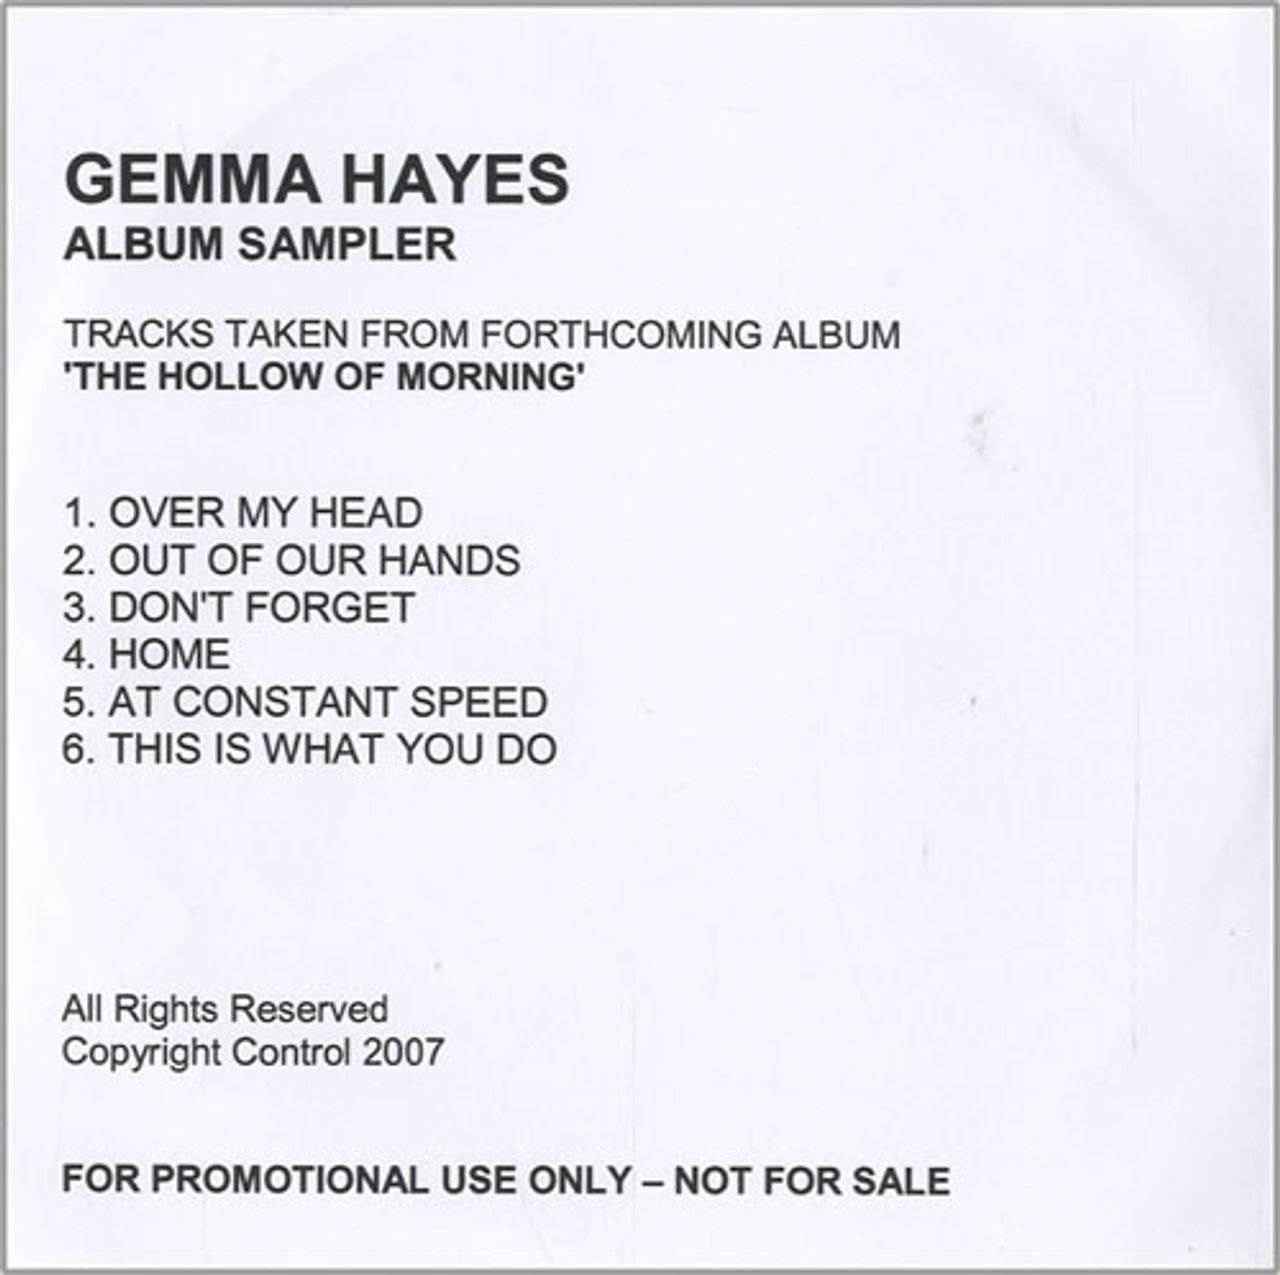 Gemma Hayes The Hollow Of Morning - Album Sampler US Promo CD-R acetate CD-R ACETATE